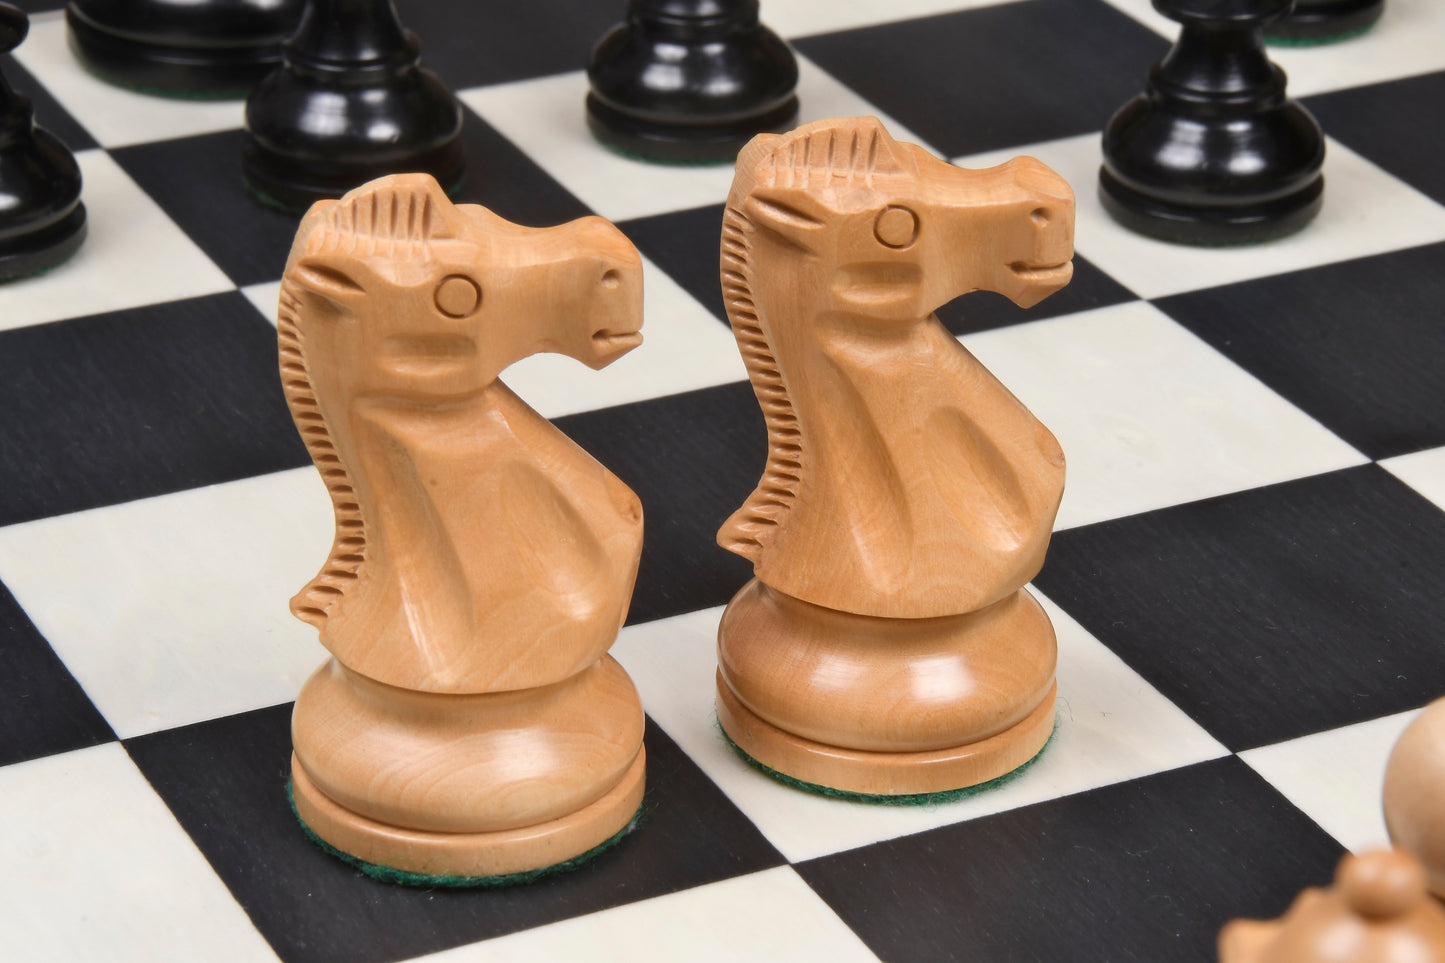 Reproduced 1972 Reykjavik Staunton Chess Pieces in Ebonized Boxwood & Natural Boxwood - 3.7" King